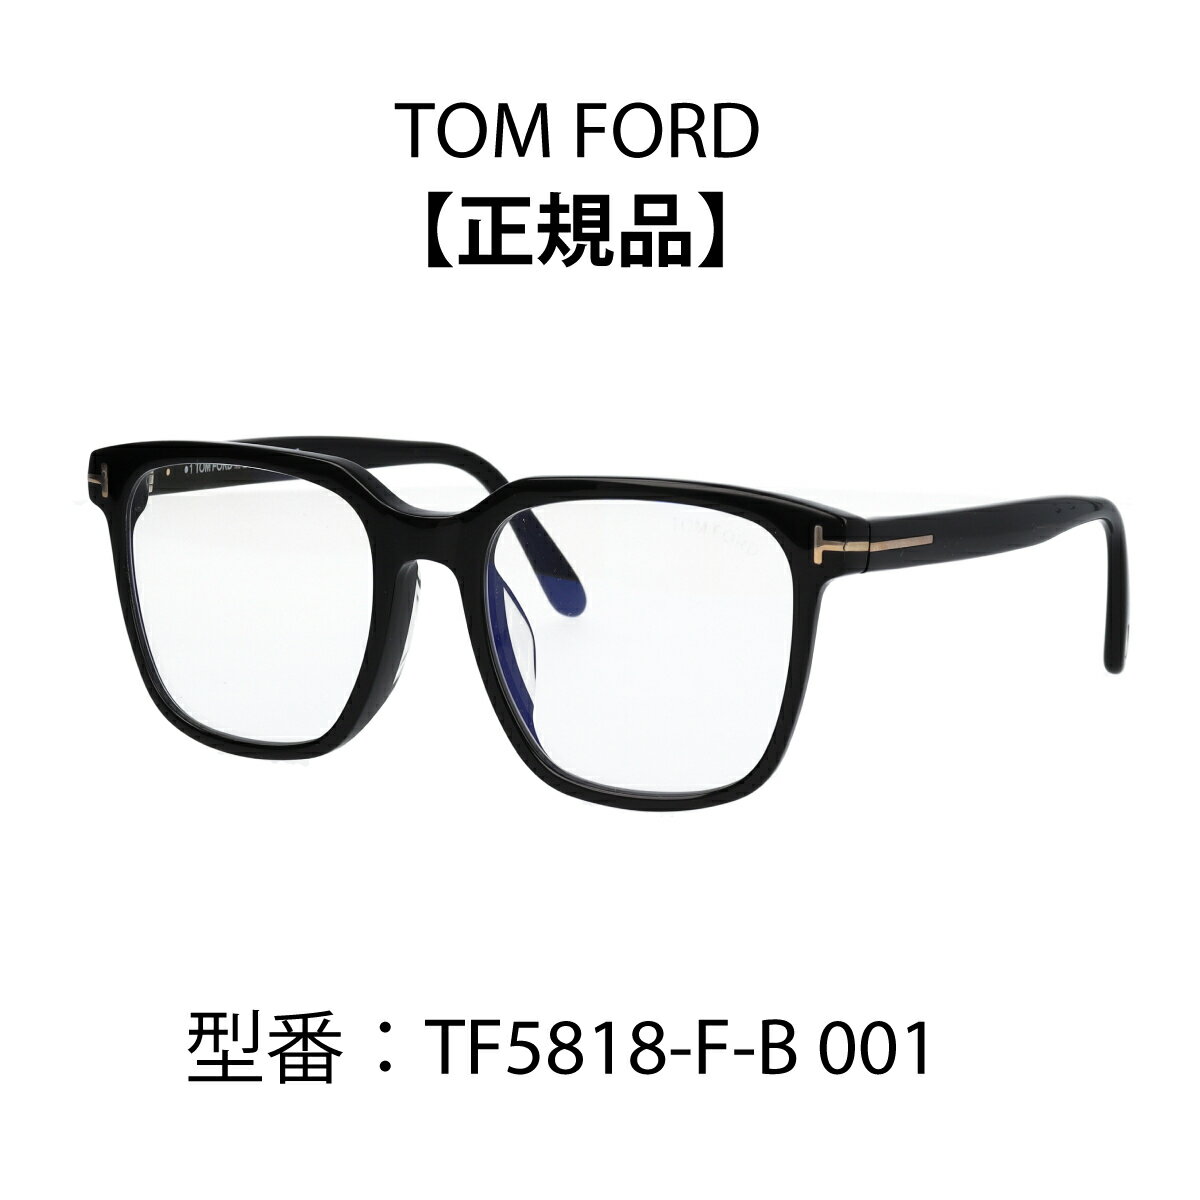 TOM FORD トムフォード 眼鏡 メガネ ブルーライトカットメガネ FT5818-F-B/V 001 (TF5818-F-B/V) アジアンフィット